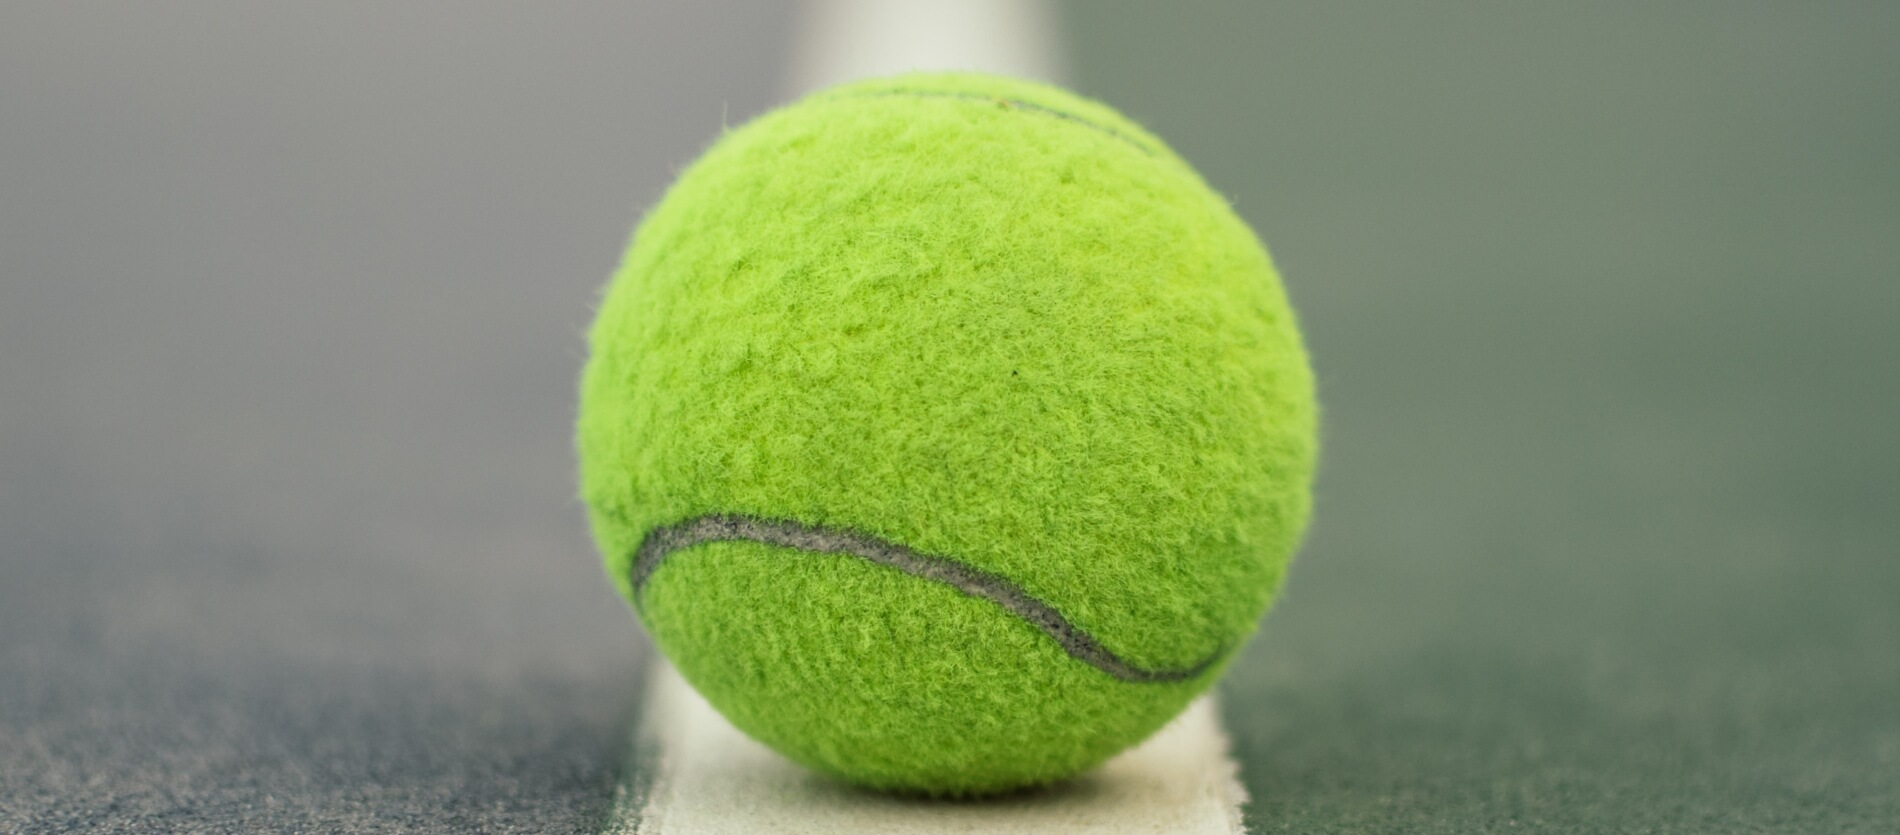 Yellow tennis ball on line of tennis court